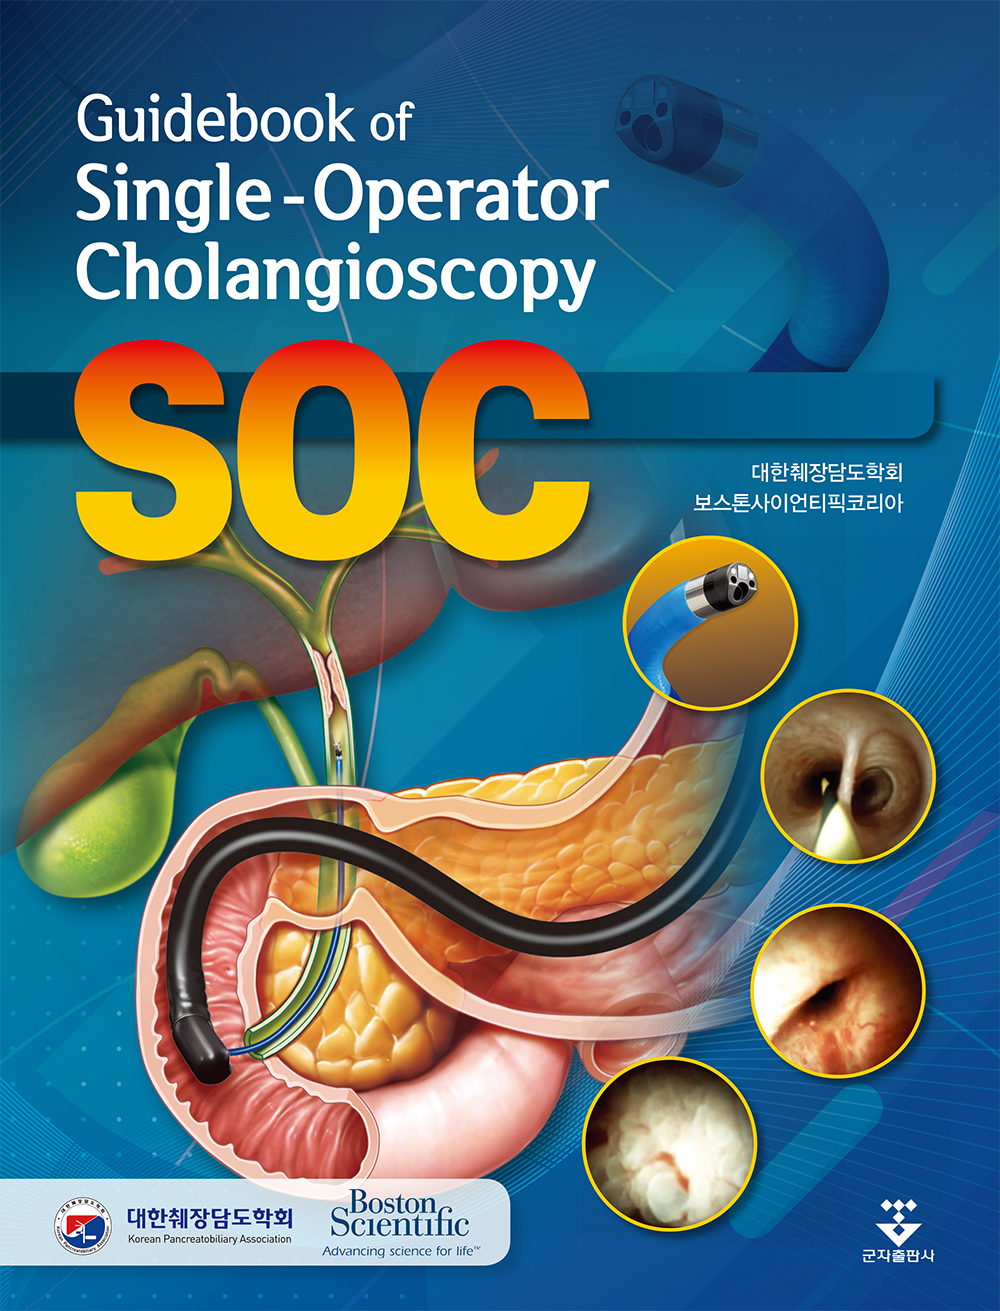 Guidebook of Single-Operator Cholangioscopy